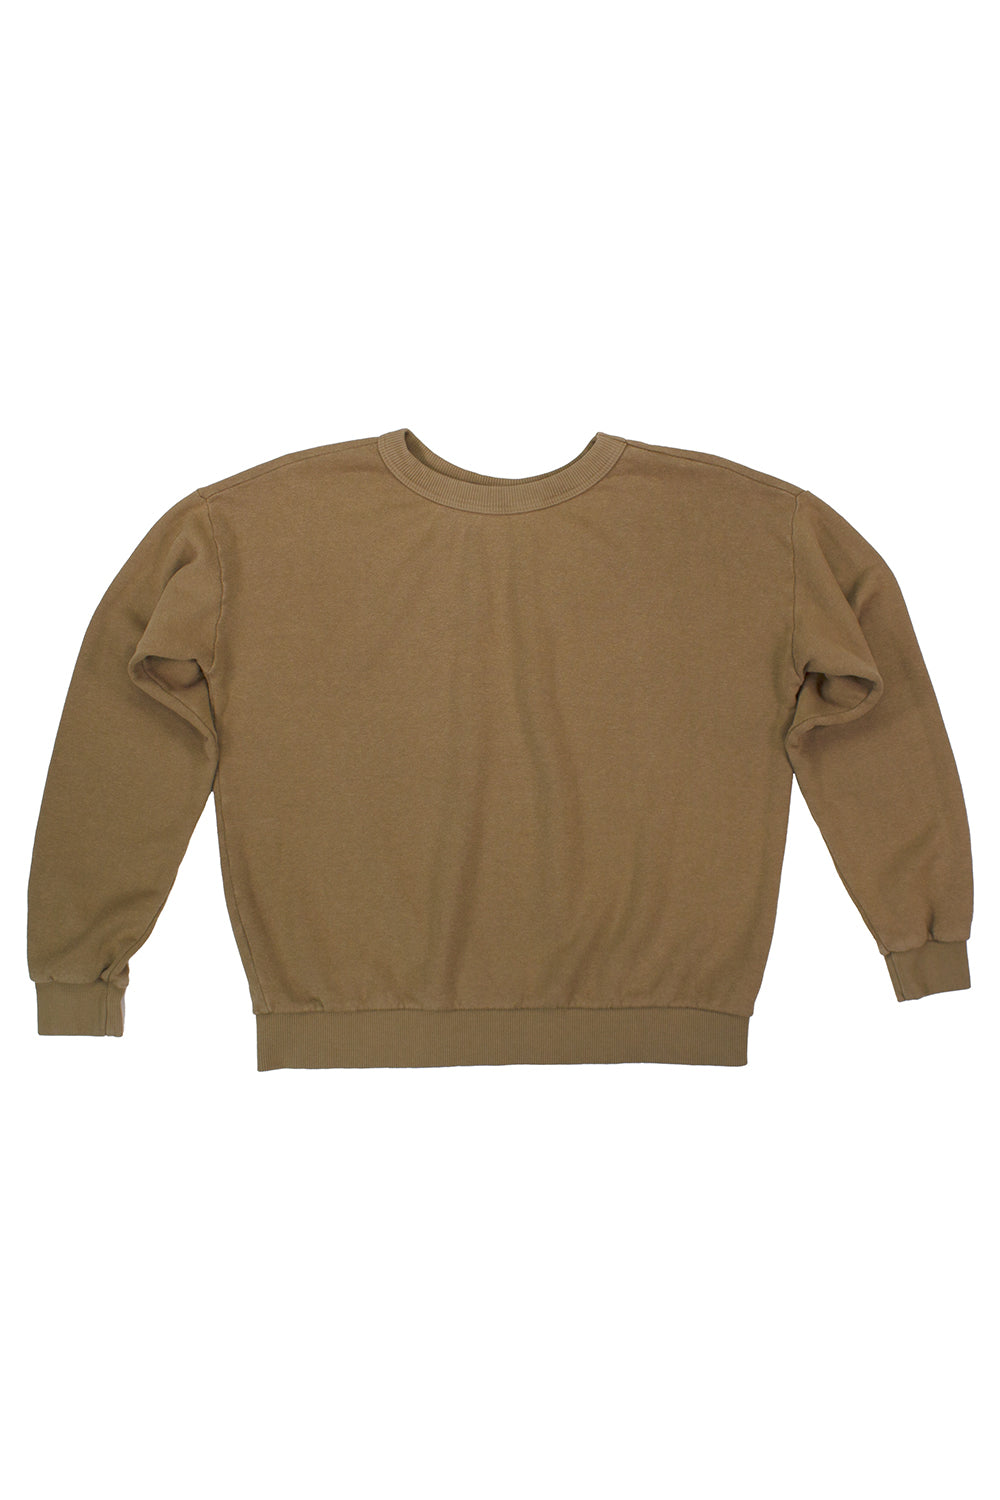 Crux Cropped Sweatshirt | Jungmaven Hemp Clothing & Accessories / Color: Coyote